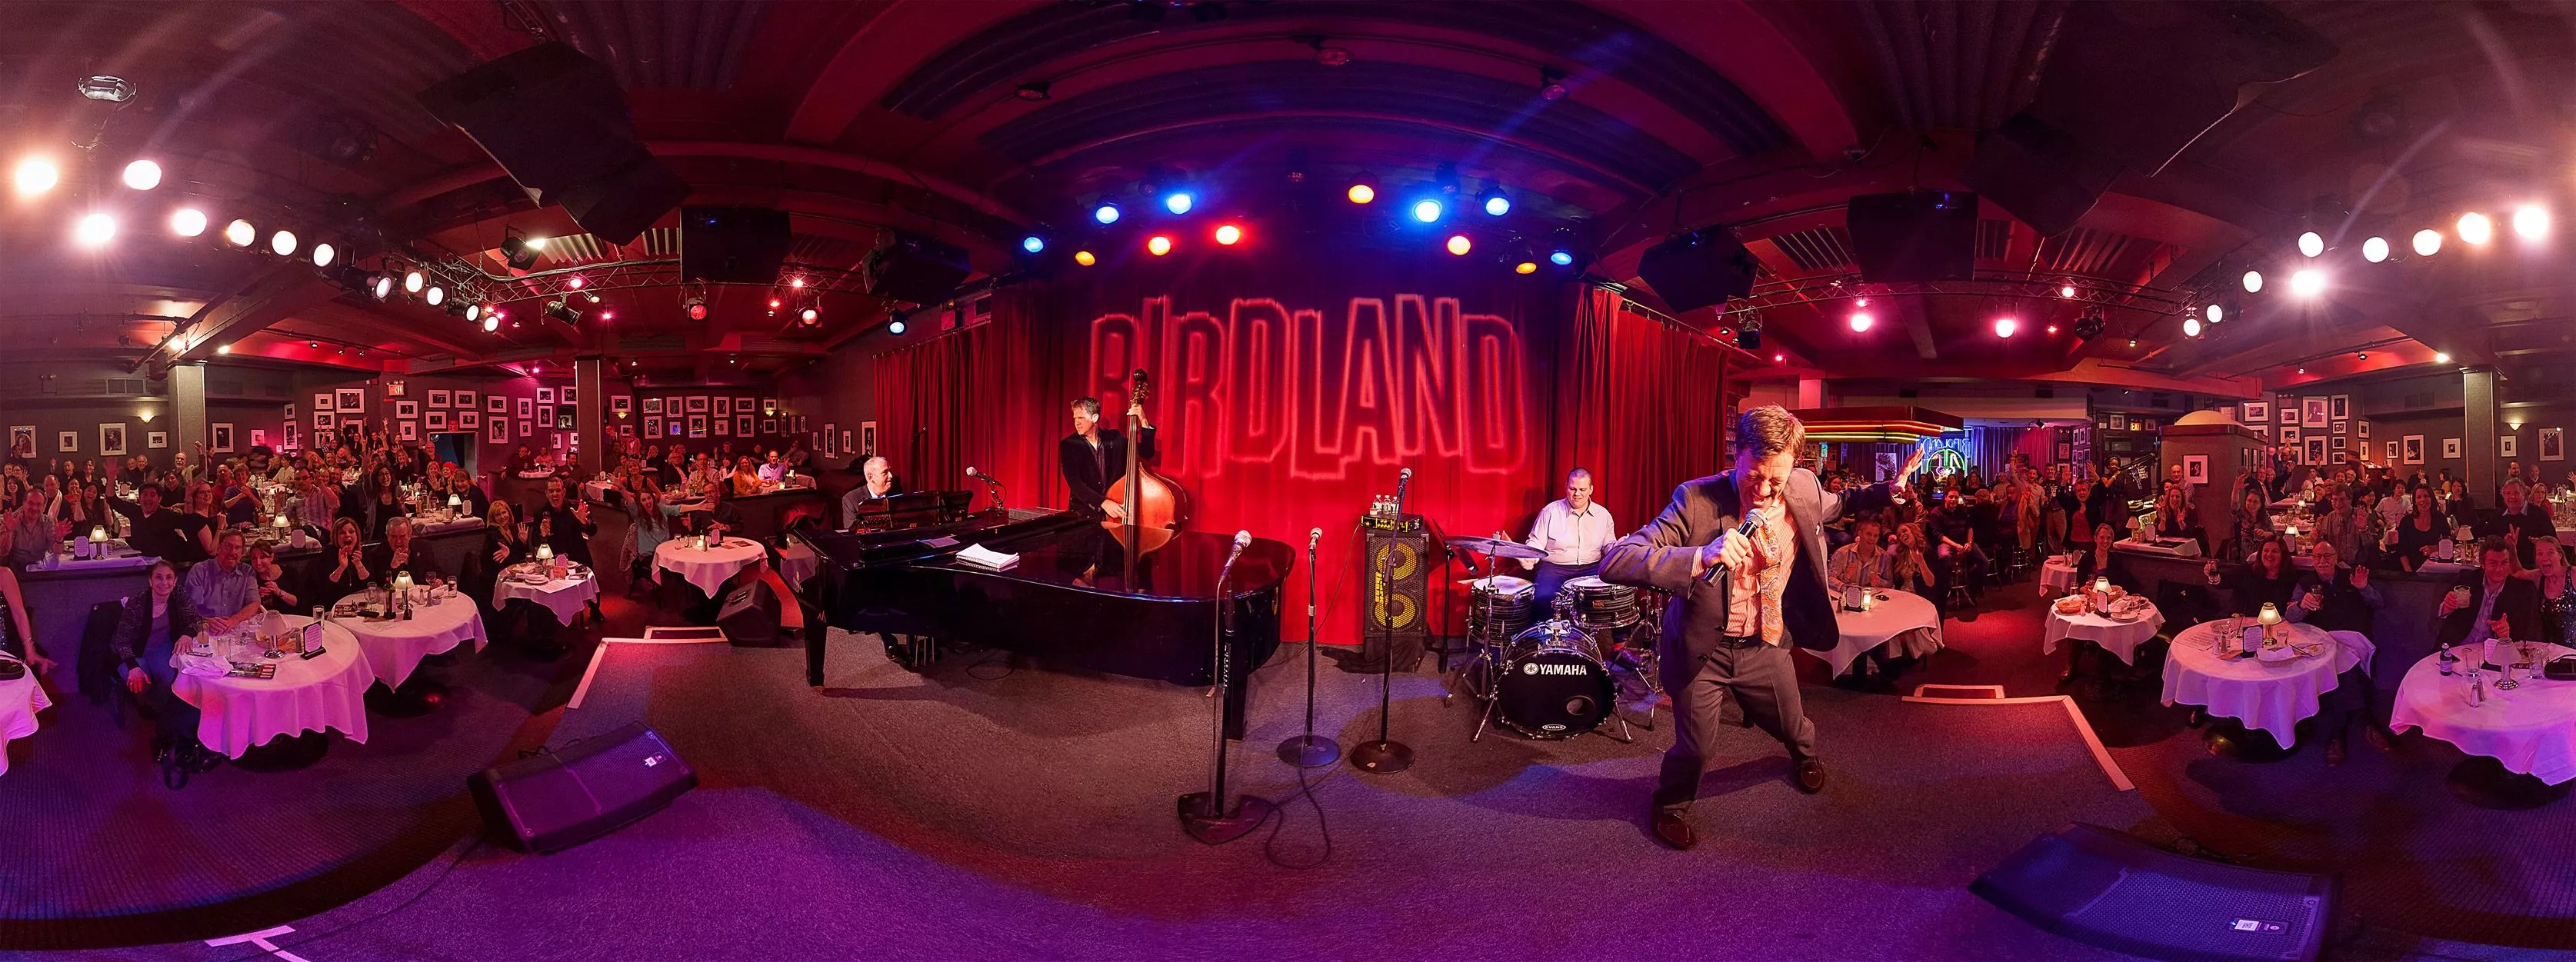 Birdland in USA, North America | Live Music Venues - Rated 3.9